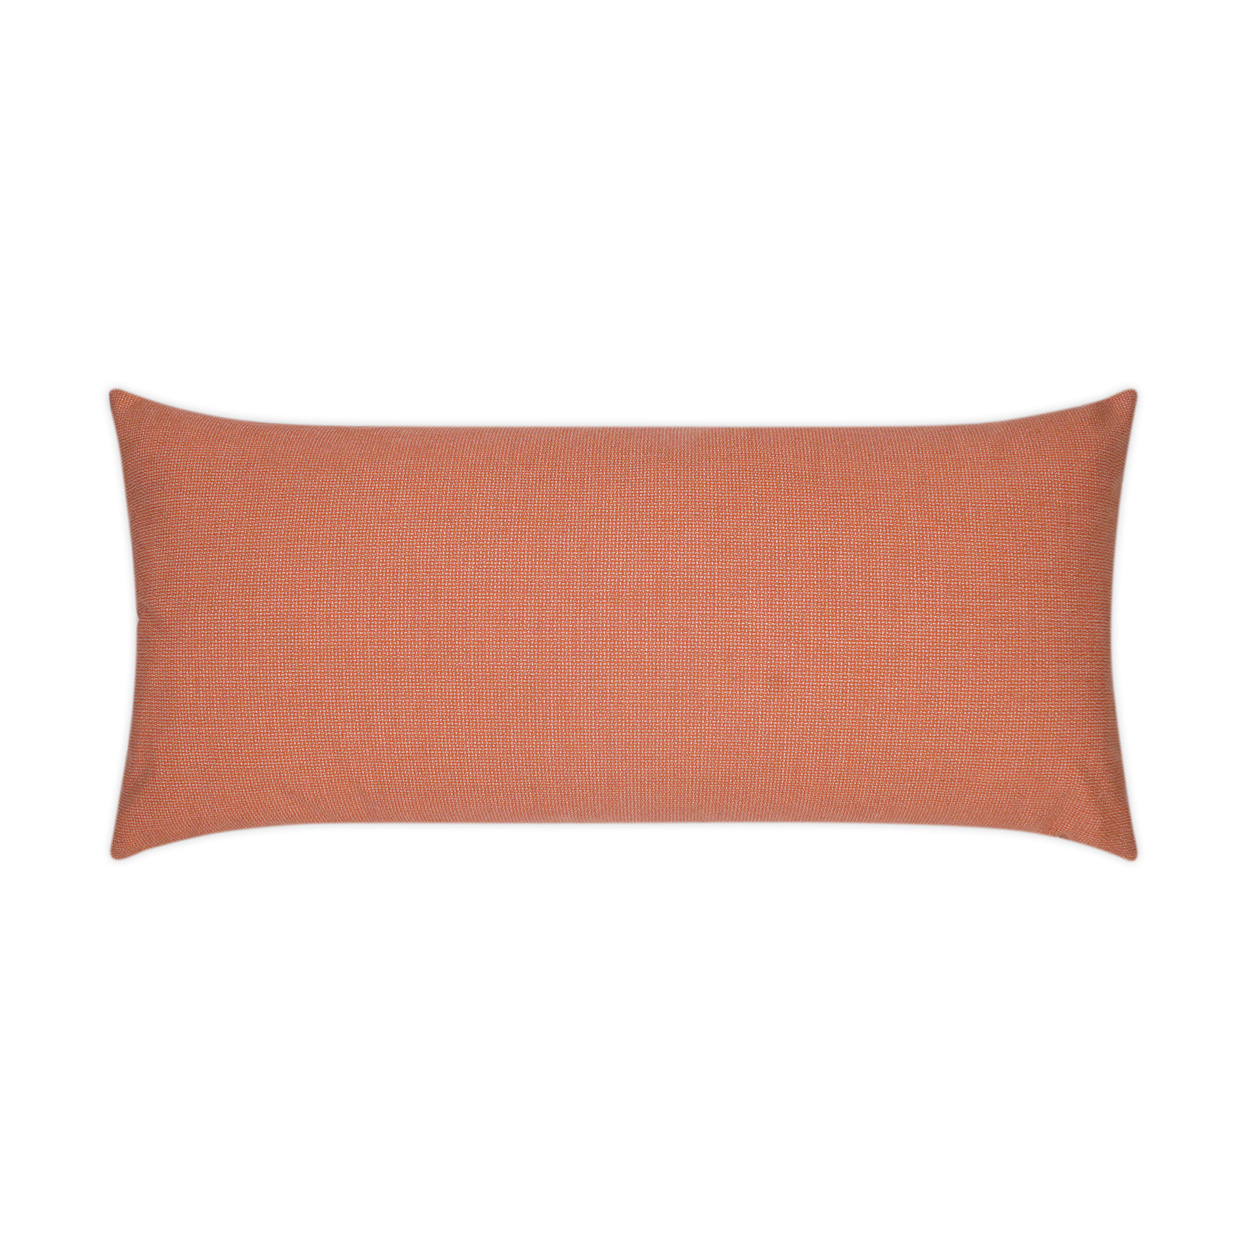 Bliss Guava Lumbar Outdoor Pillow 24x12